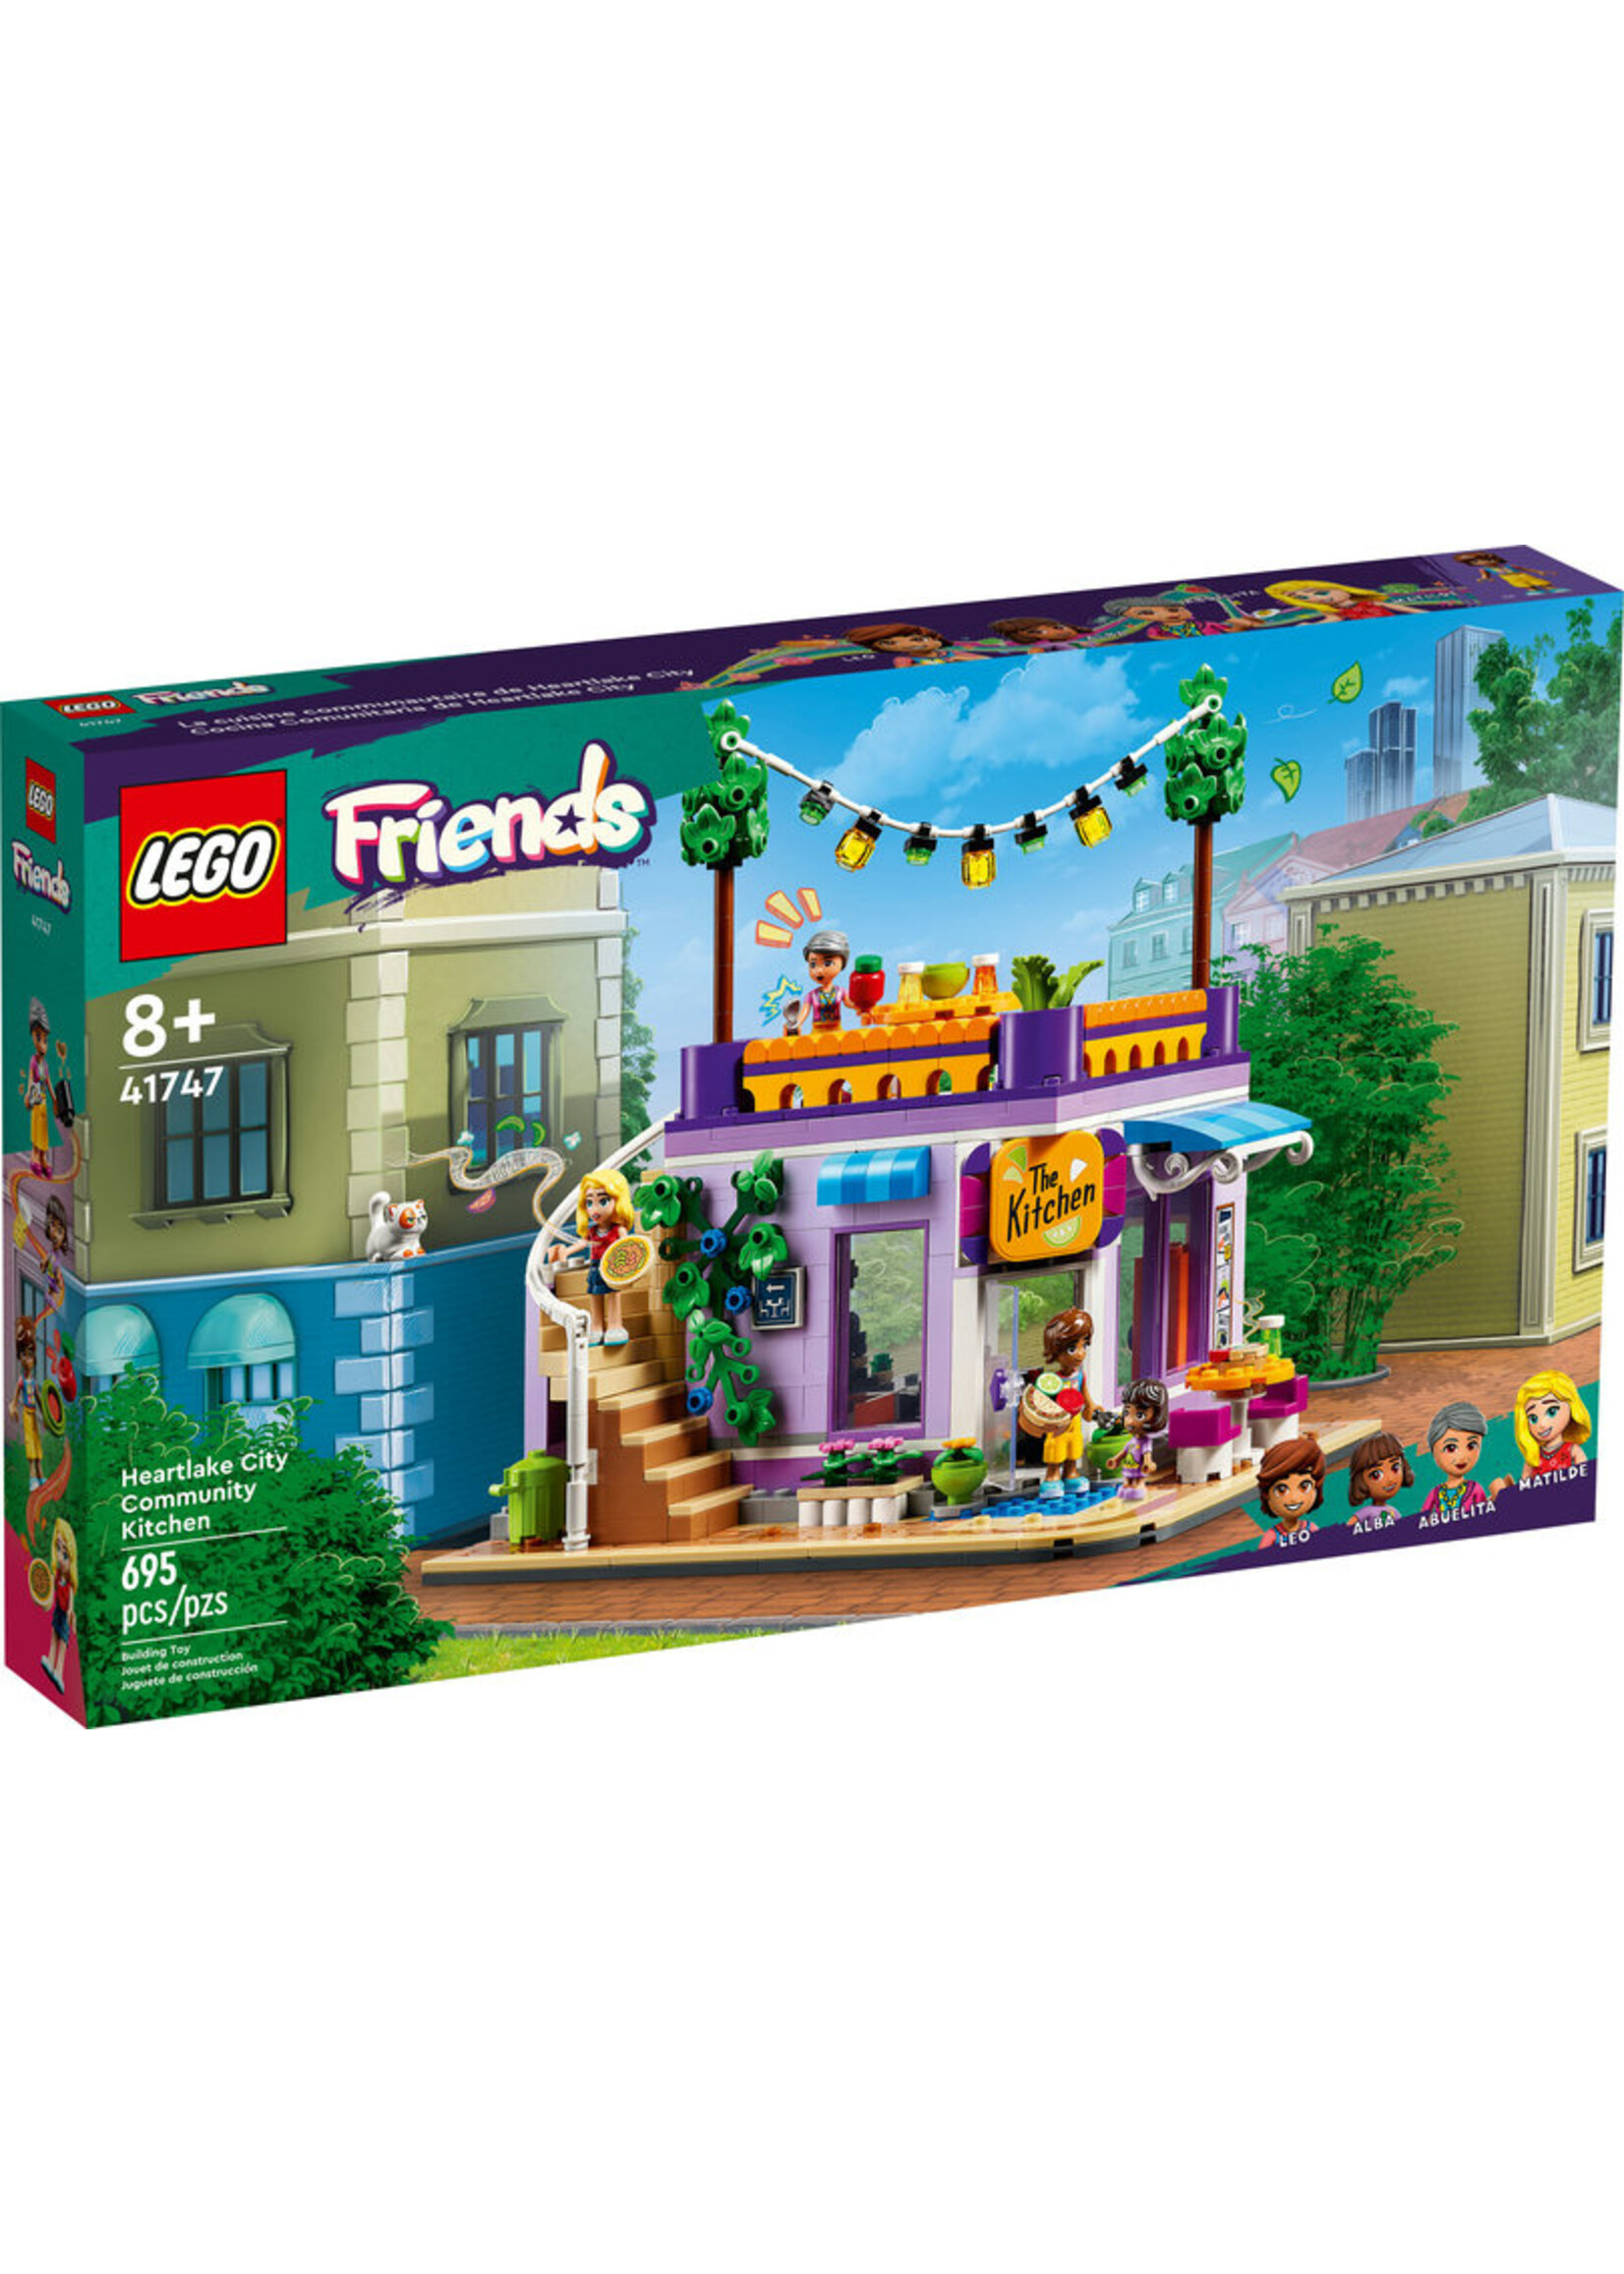 LEGO 41747 - Heartlake City Community Kitchen